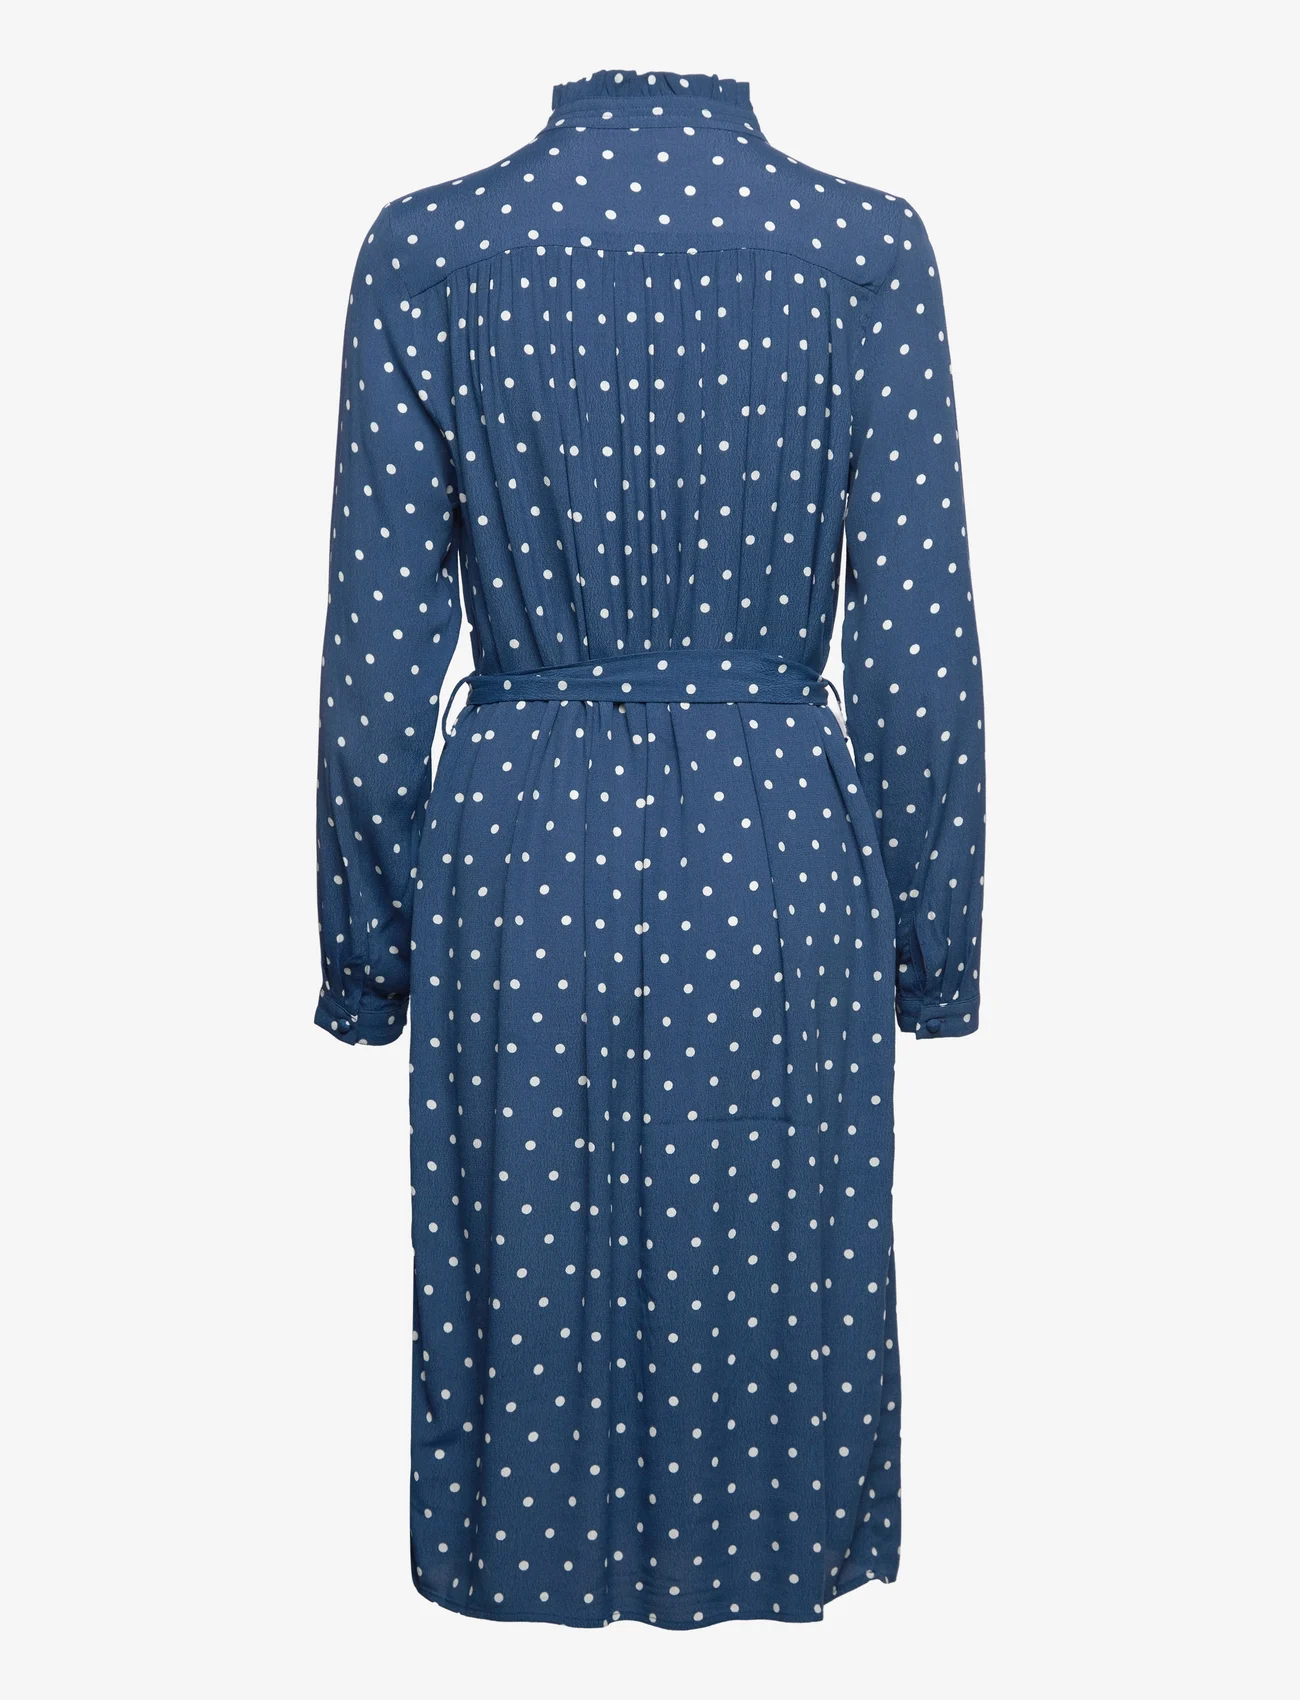 Noa Noa - Dress long sleeve - skjortekjoler - print dark blue - 1